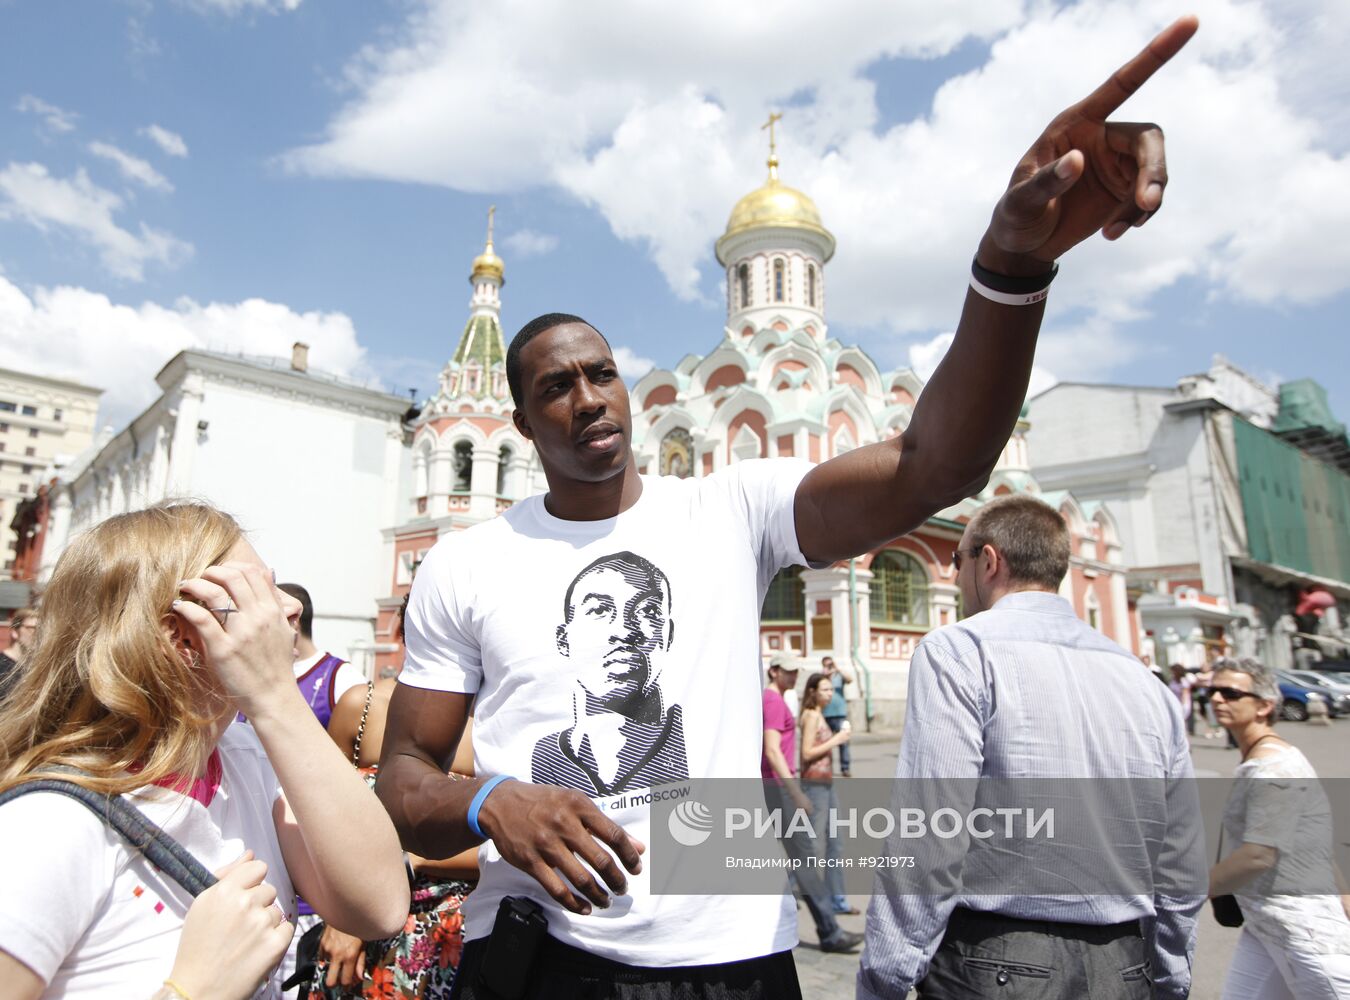 Баскетболисты НБА Дуайт Ховард и Андрей Кириленко в Москве